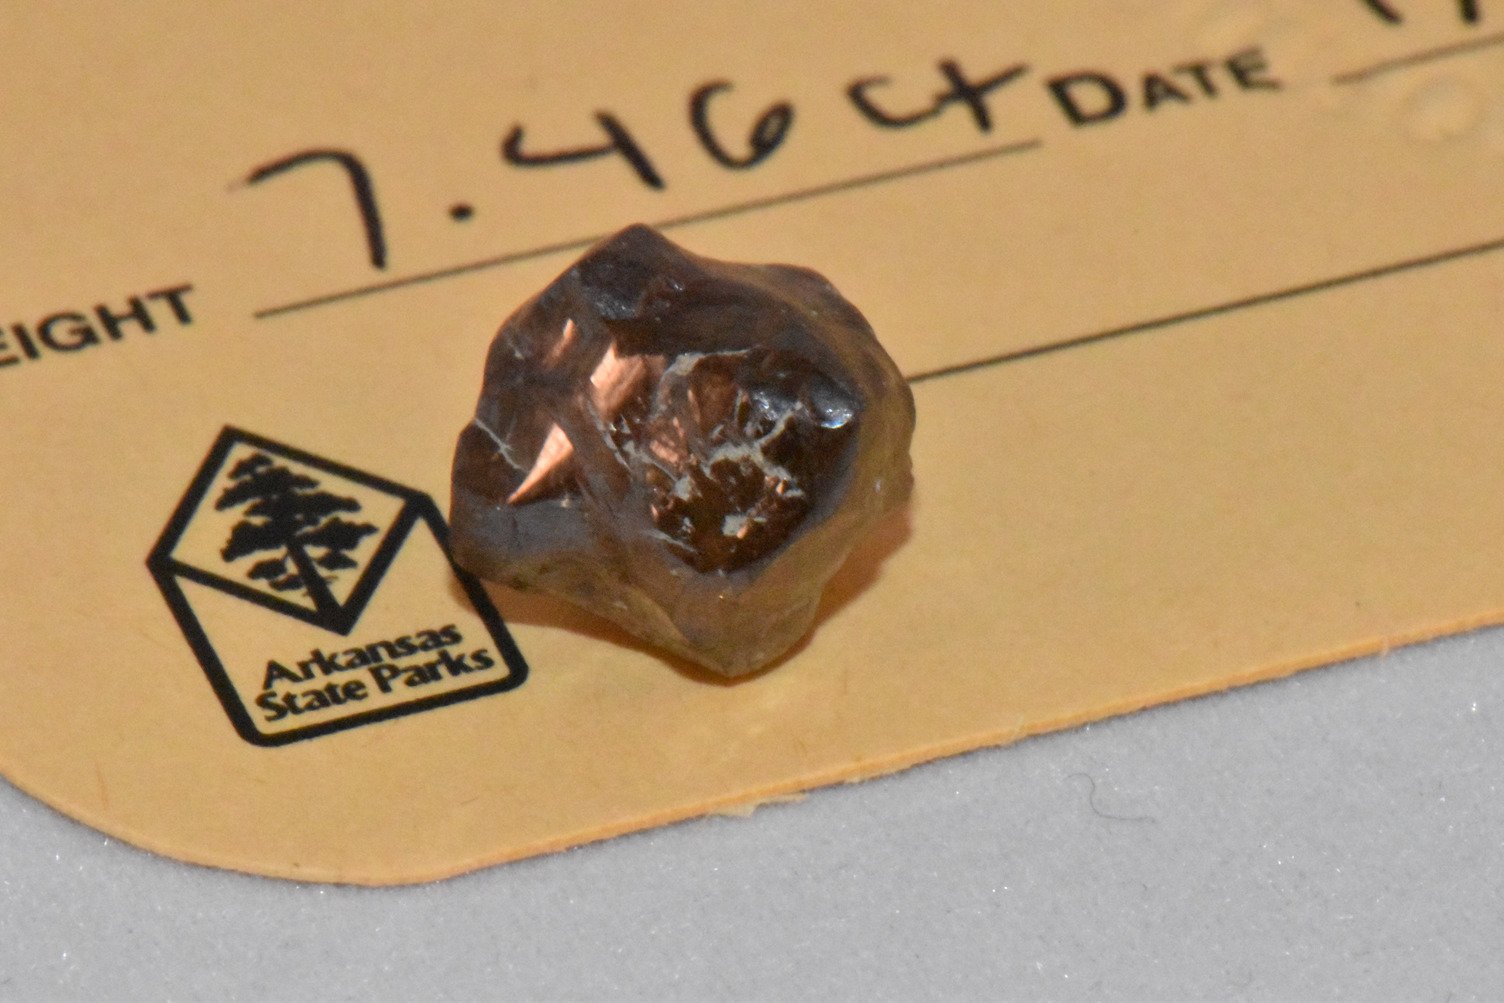 The Carine Diamond found at Crate of Diamonds State Park, Arkansas. 